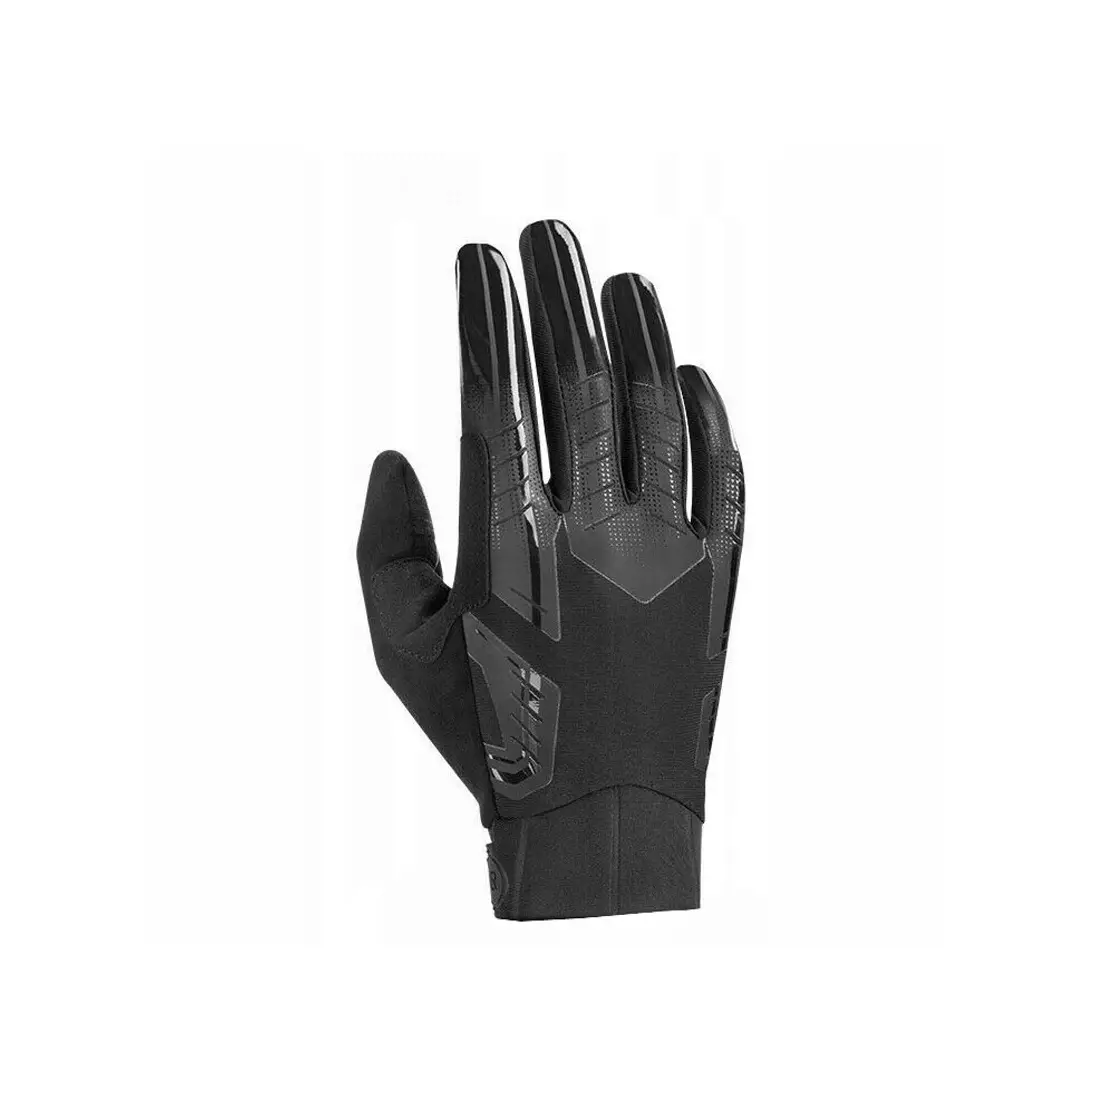 Rockbros mănuși de ciclism negre S208BK